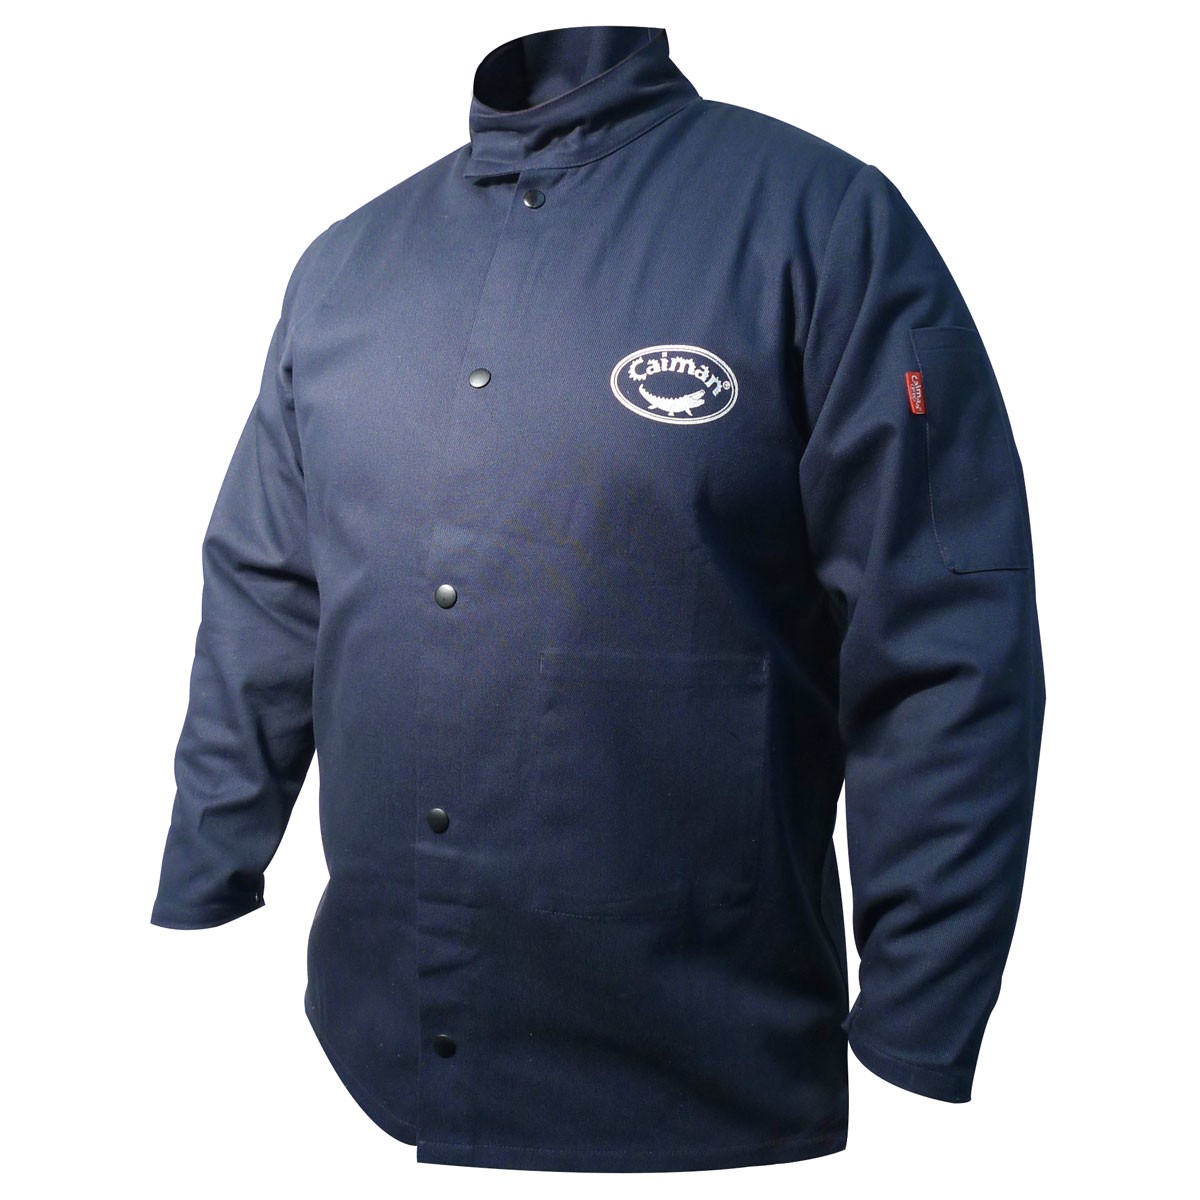 Caiman® 9oz FR Cotton Coat / Jacket (#3000)